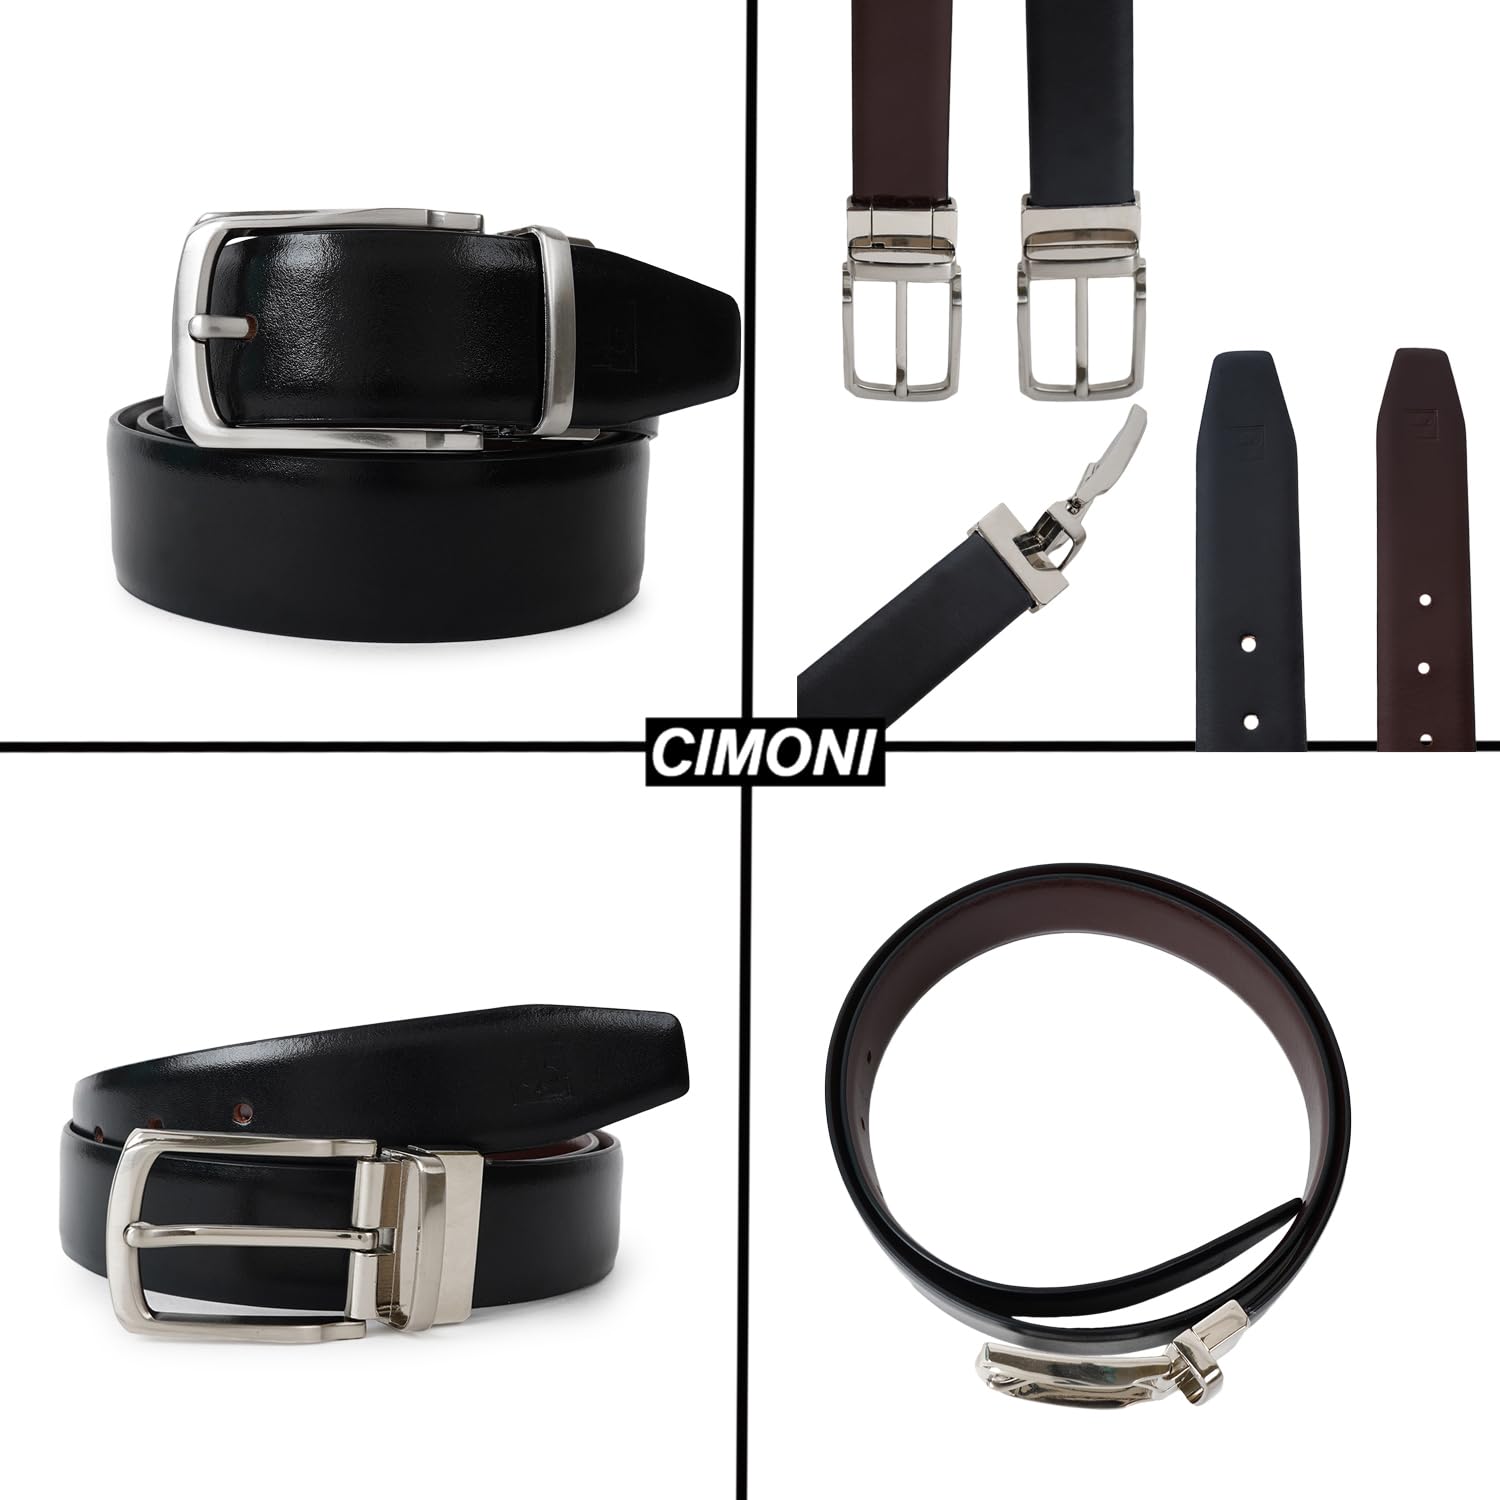 CIMONI Genuine Leather Classic Slim Design Reversible Casual Formal Dailyuse Black Brown Belt For Men (1 Year Gurantee)